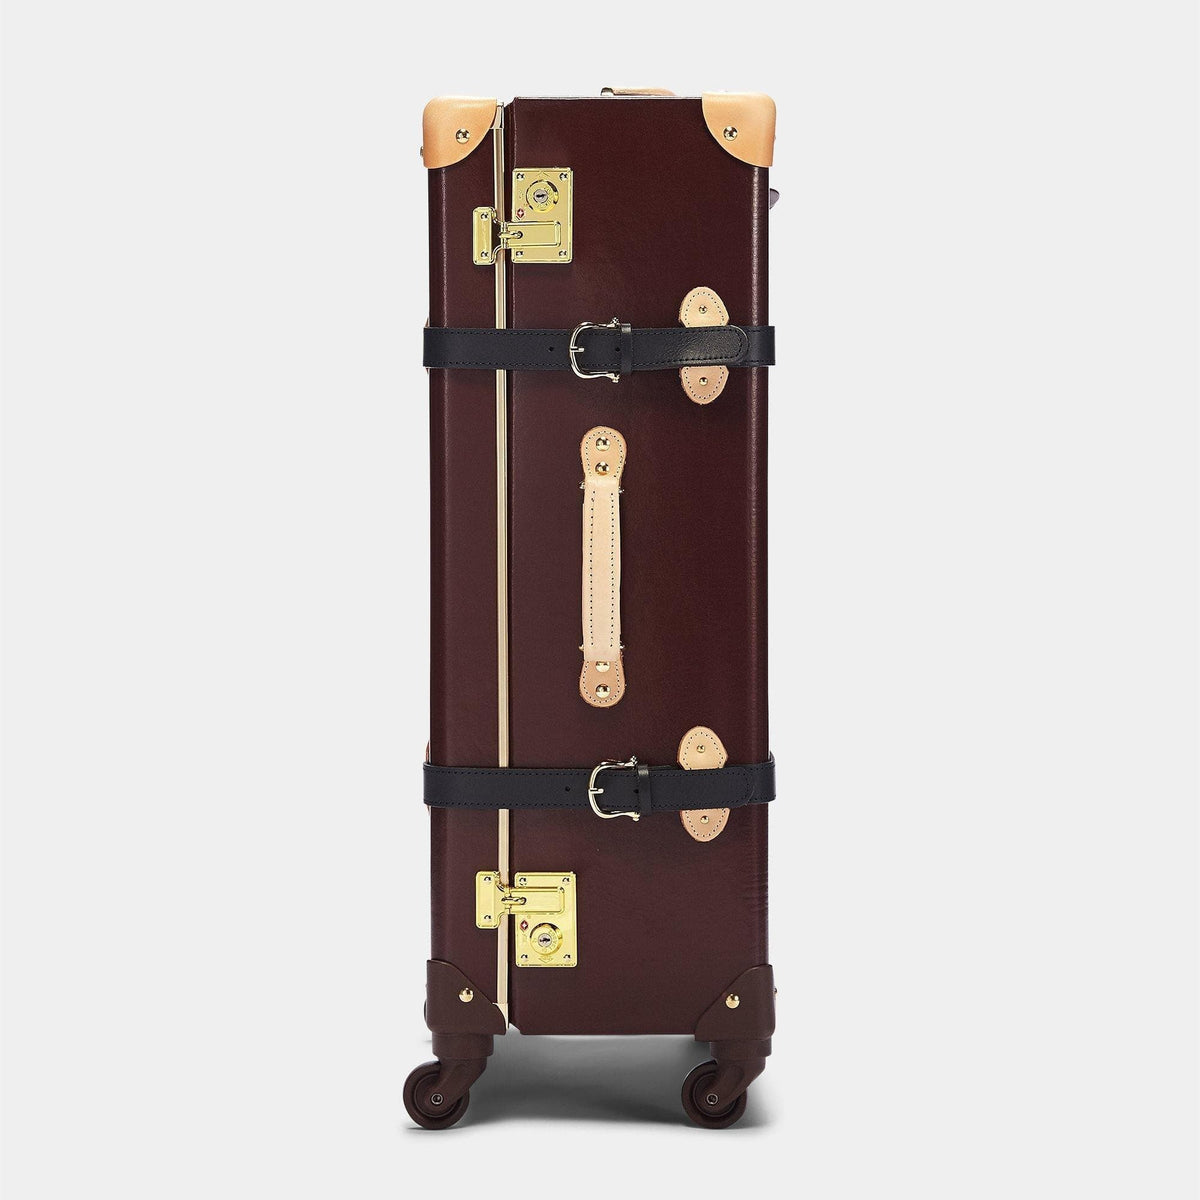 The Architect - Burgundy Check In Spinner Spinner Steamline Luggage 